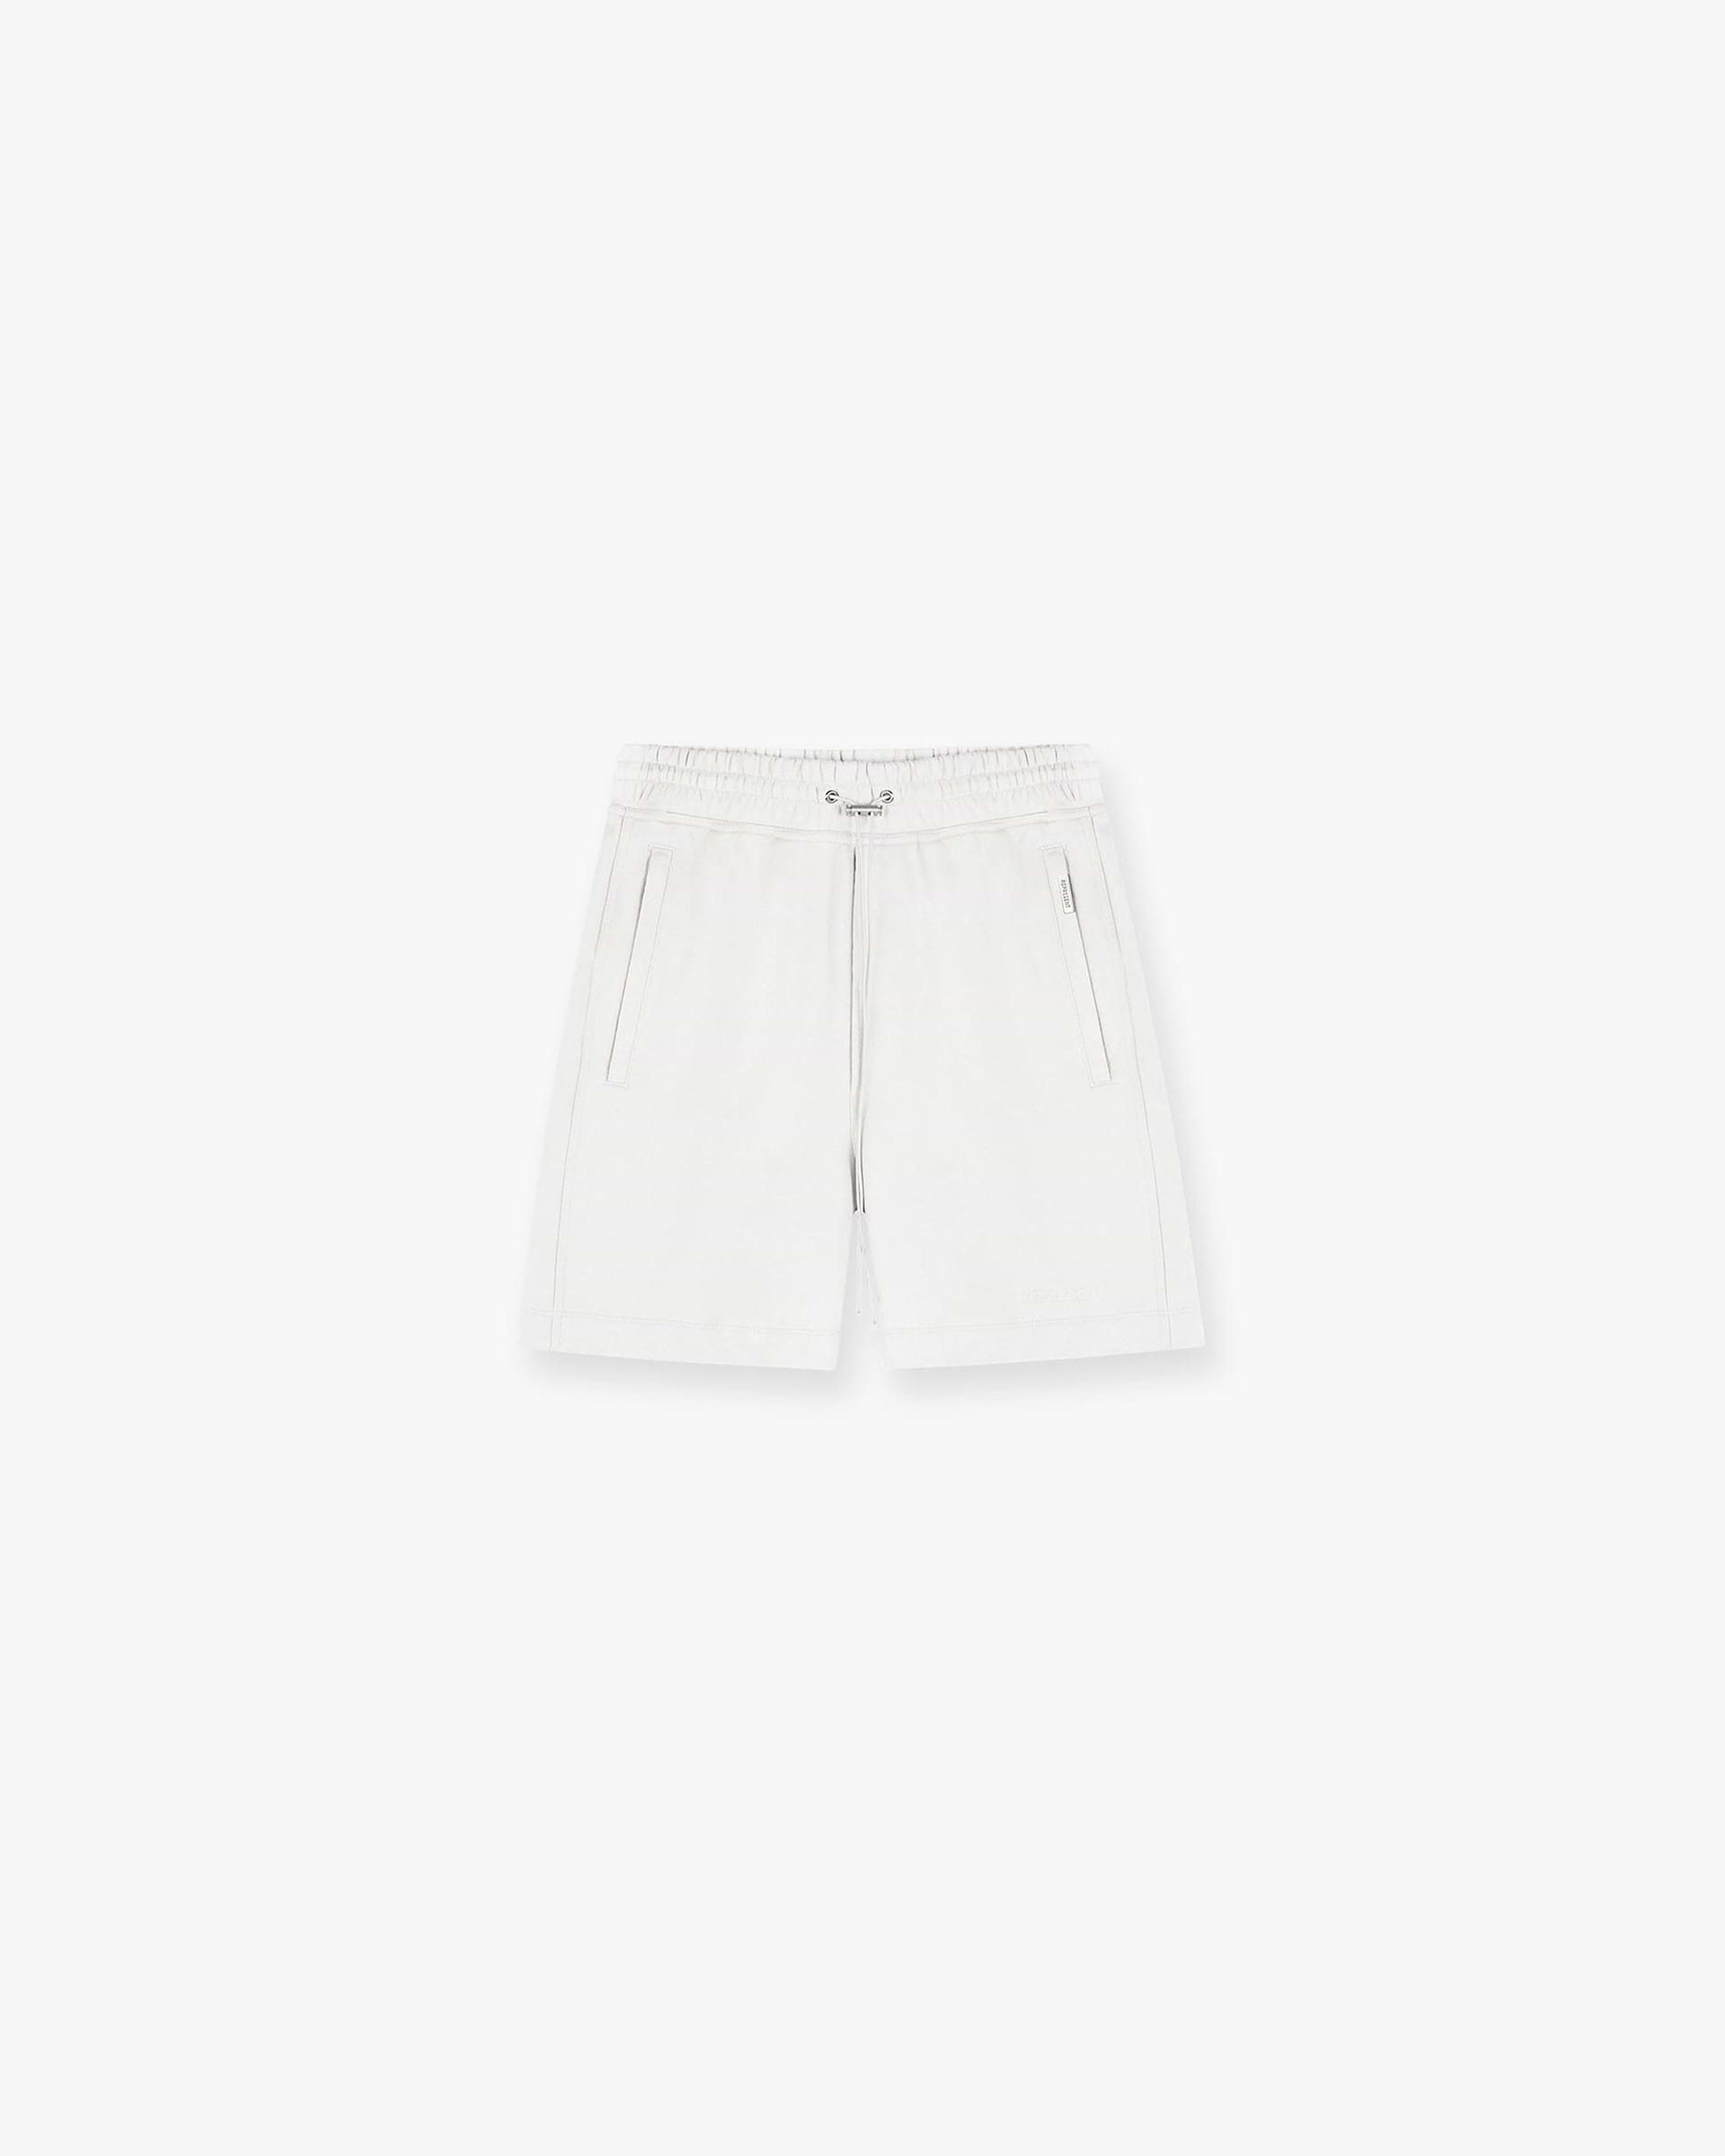 Blank Shorts | Flat White Shorts BLANKS | Represent Clo